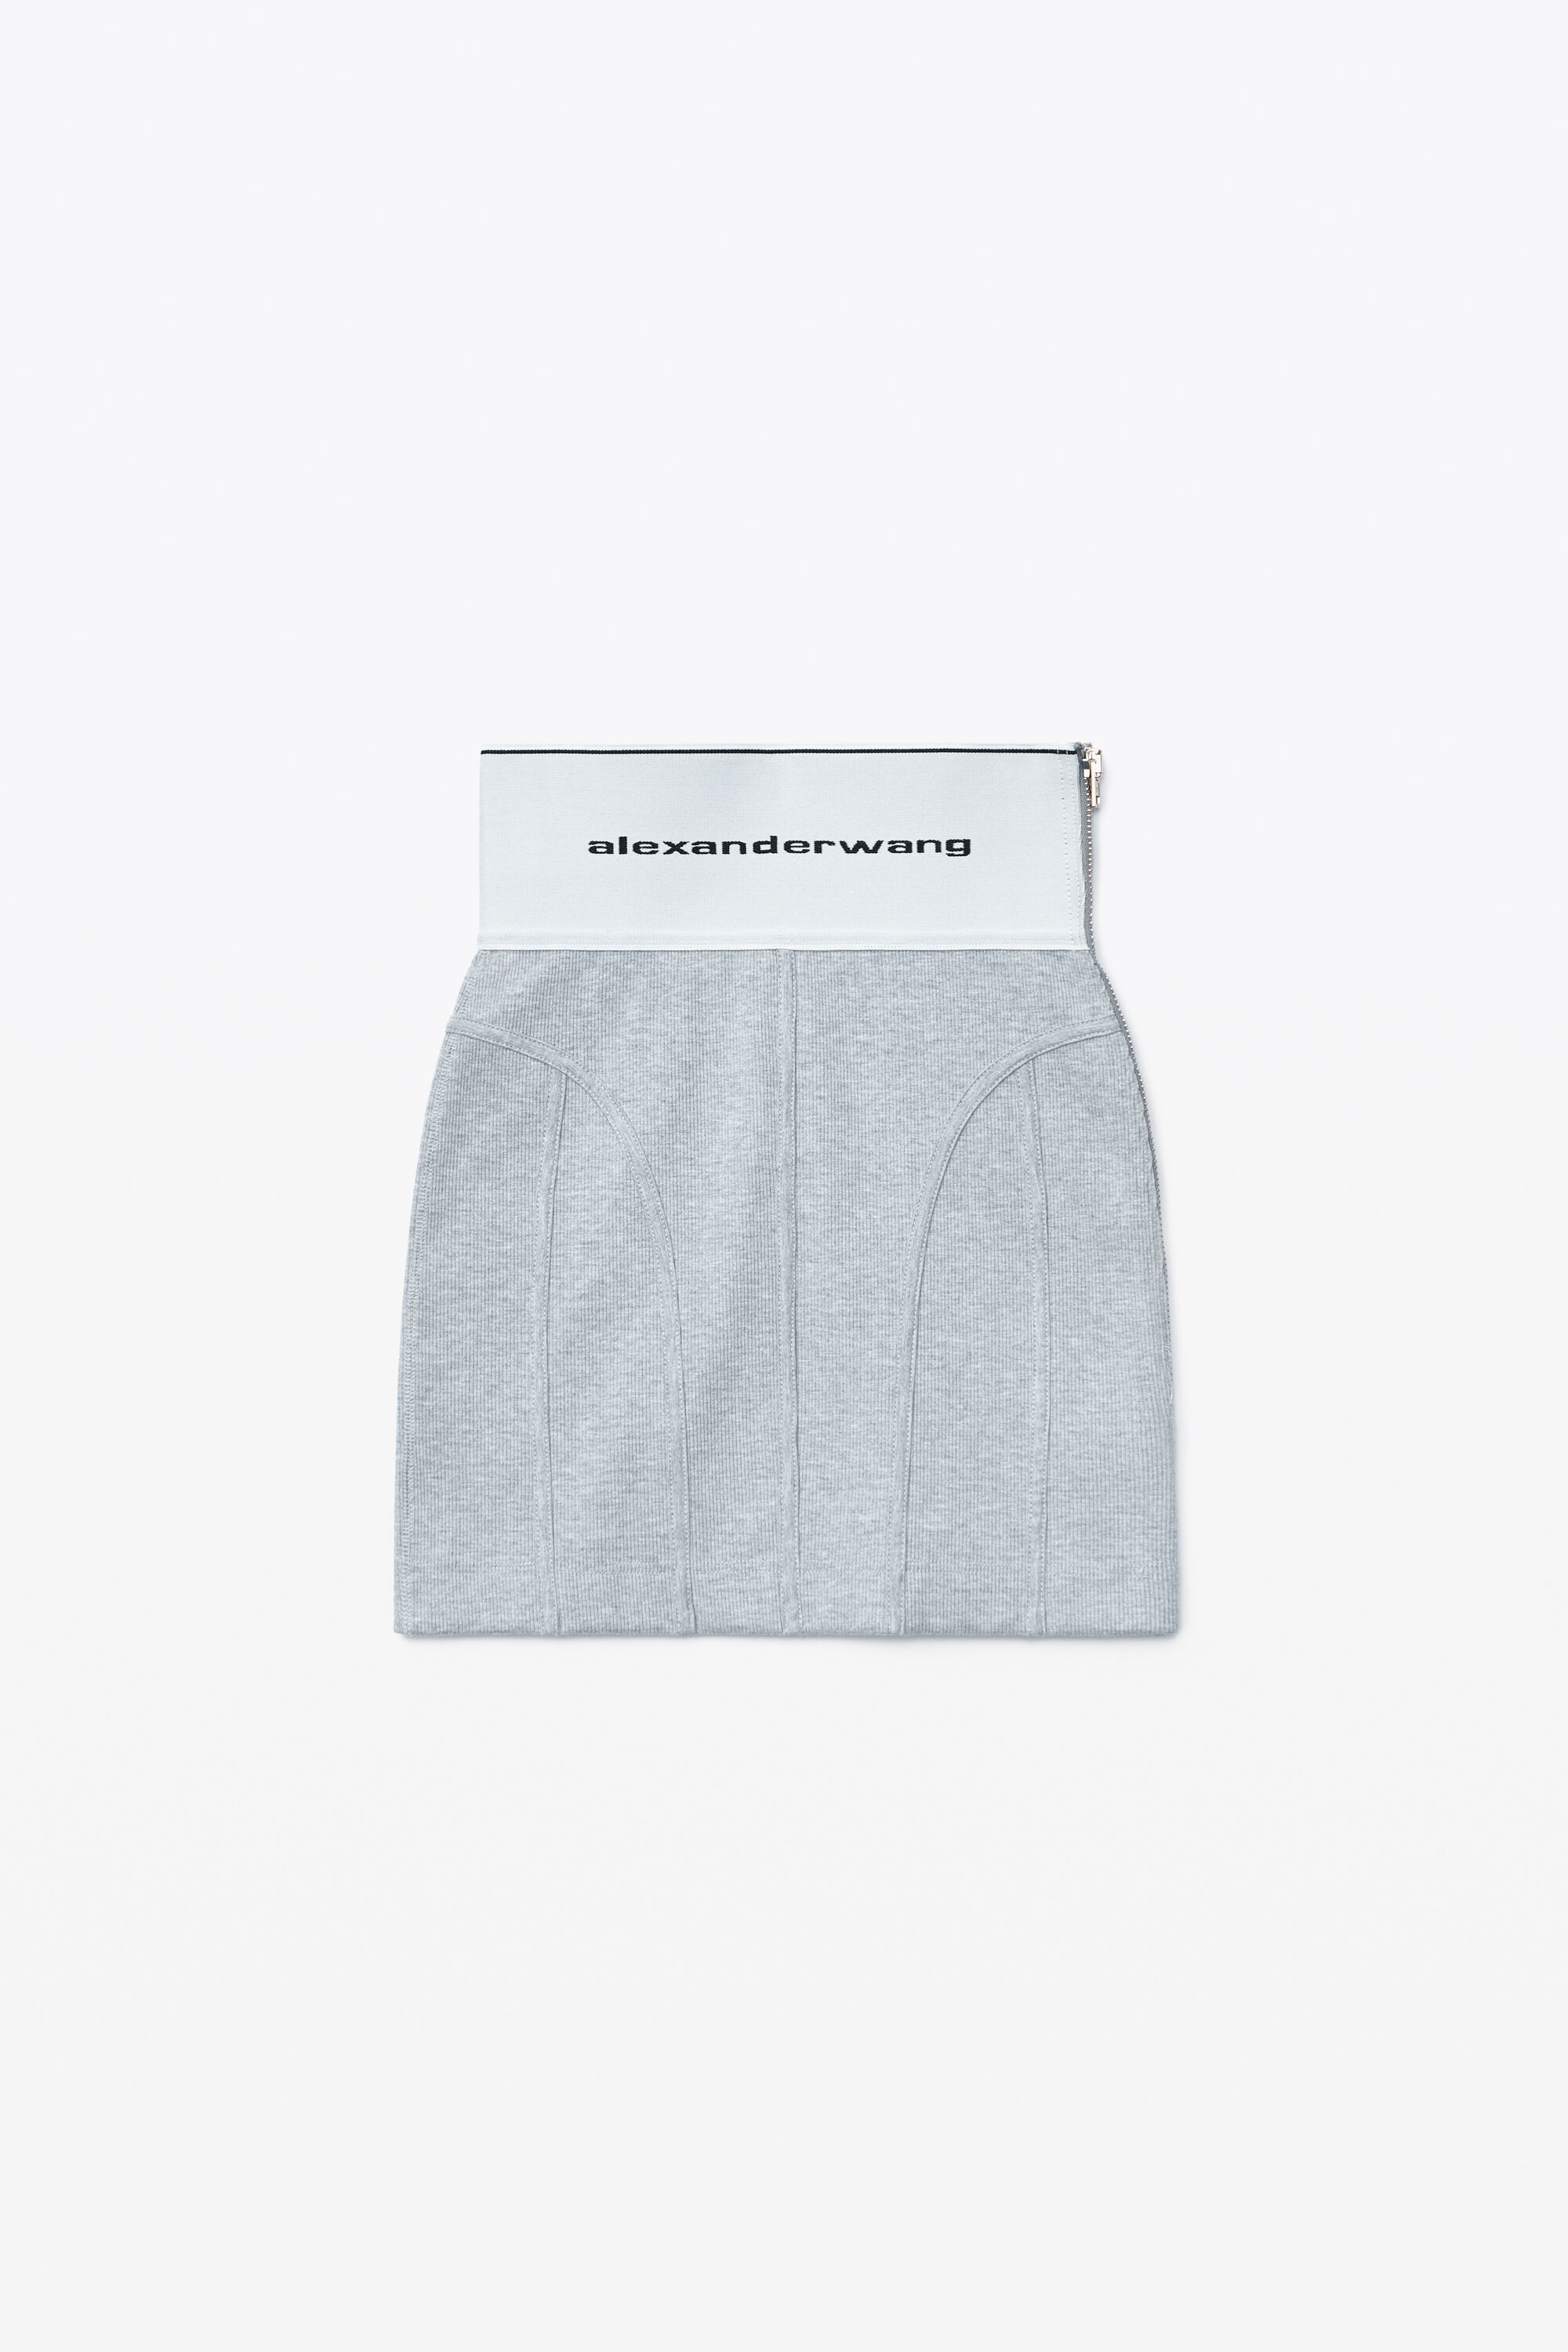 alexanderwang ミニスカート sサイズ グレー | labiela.com